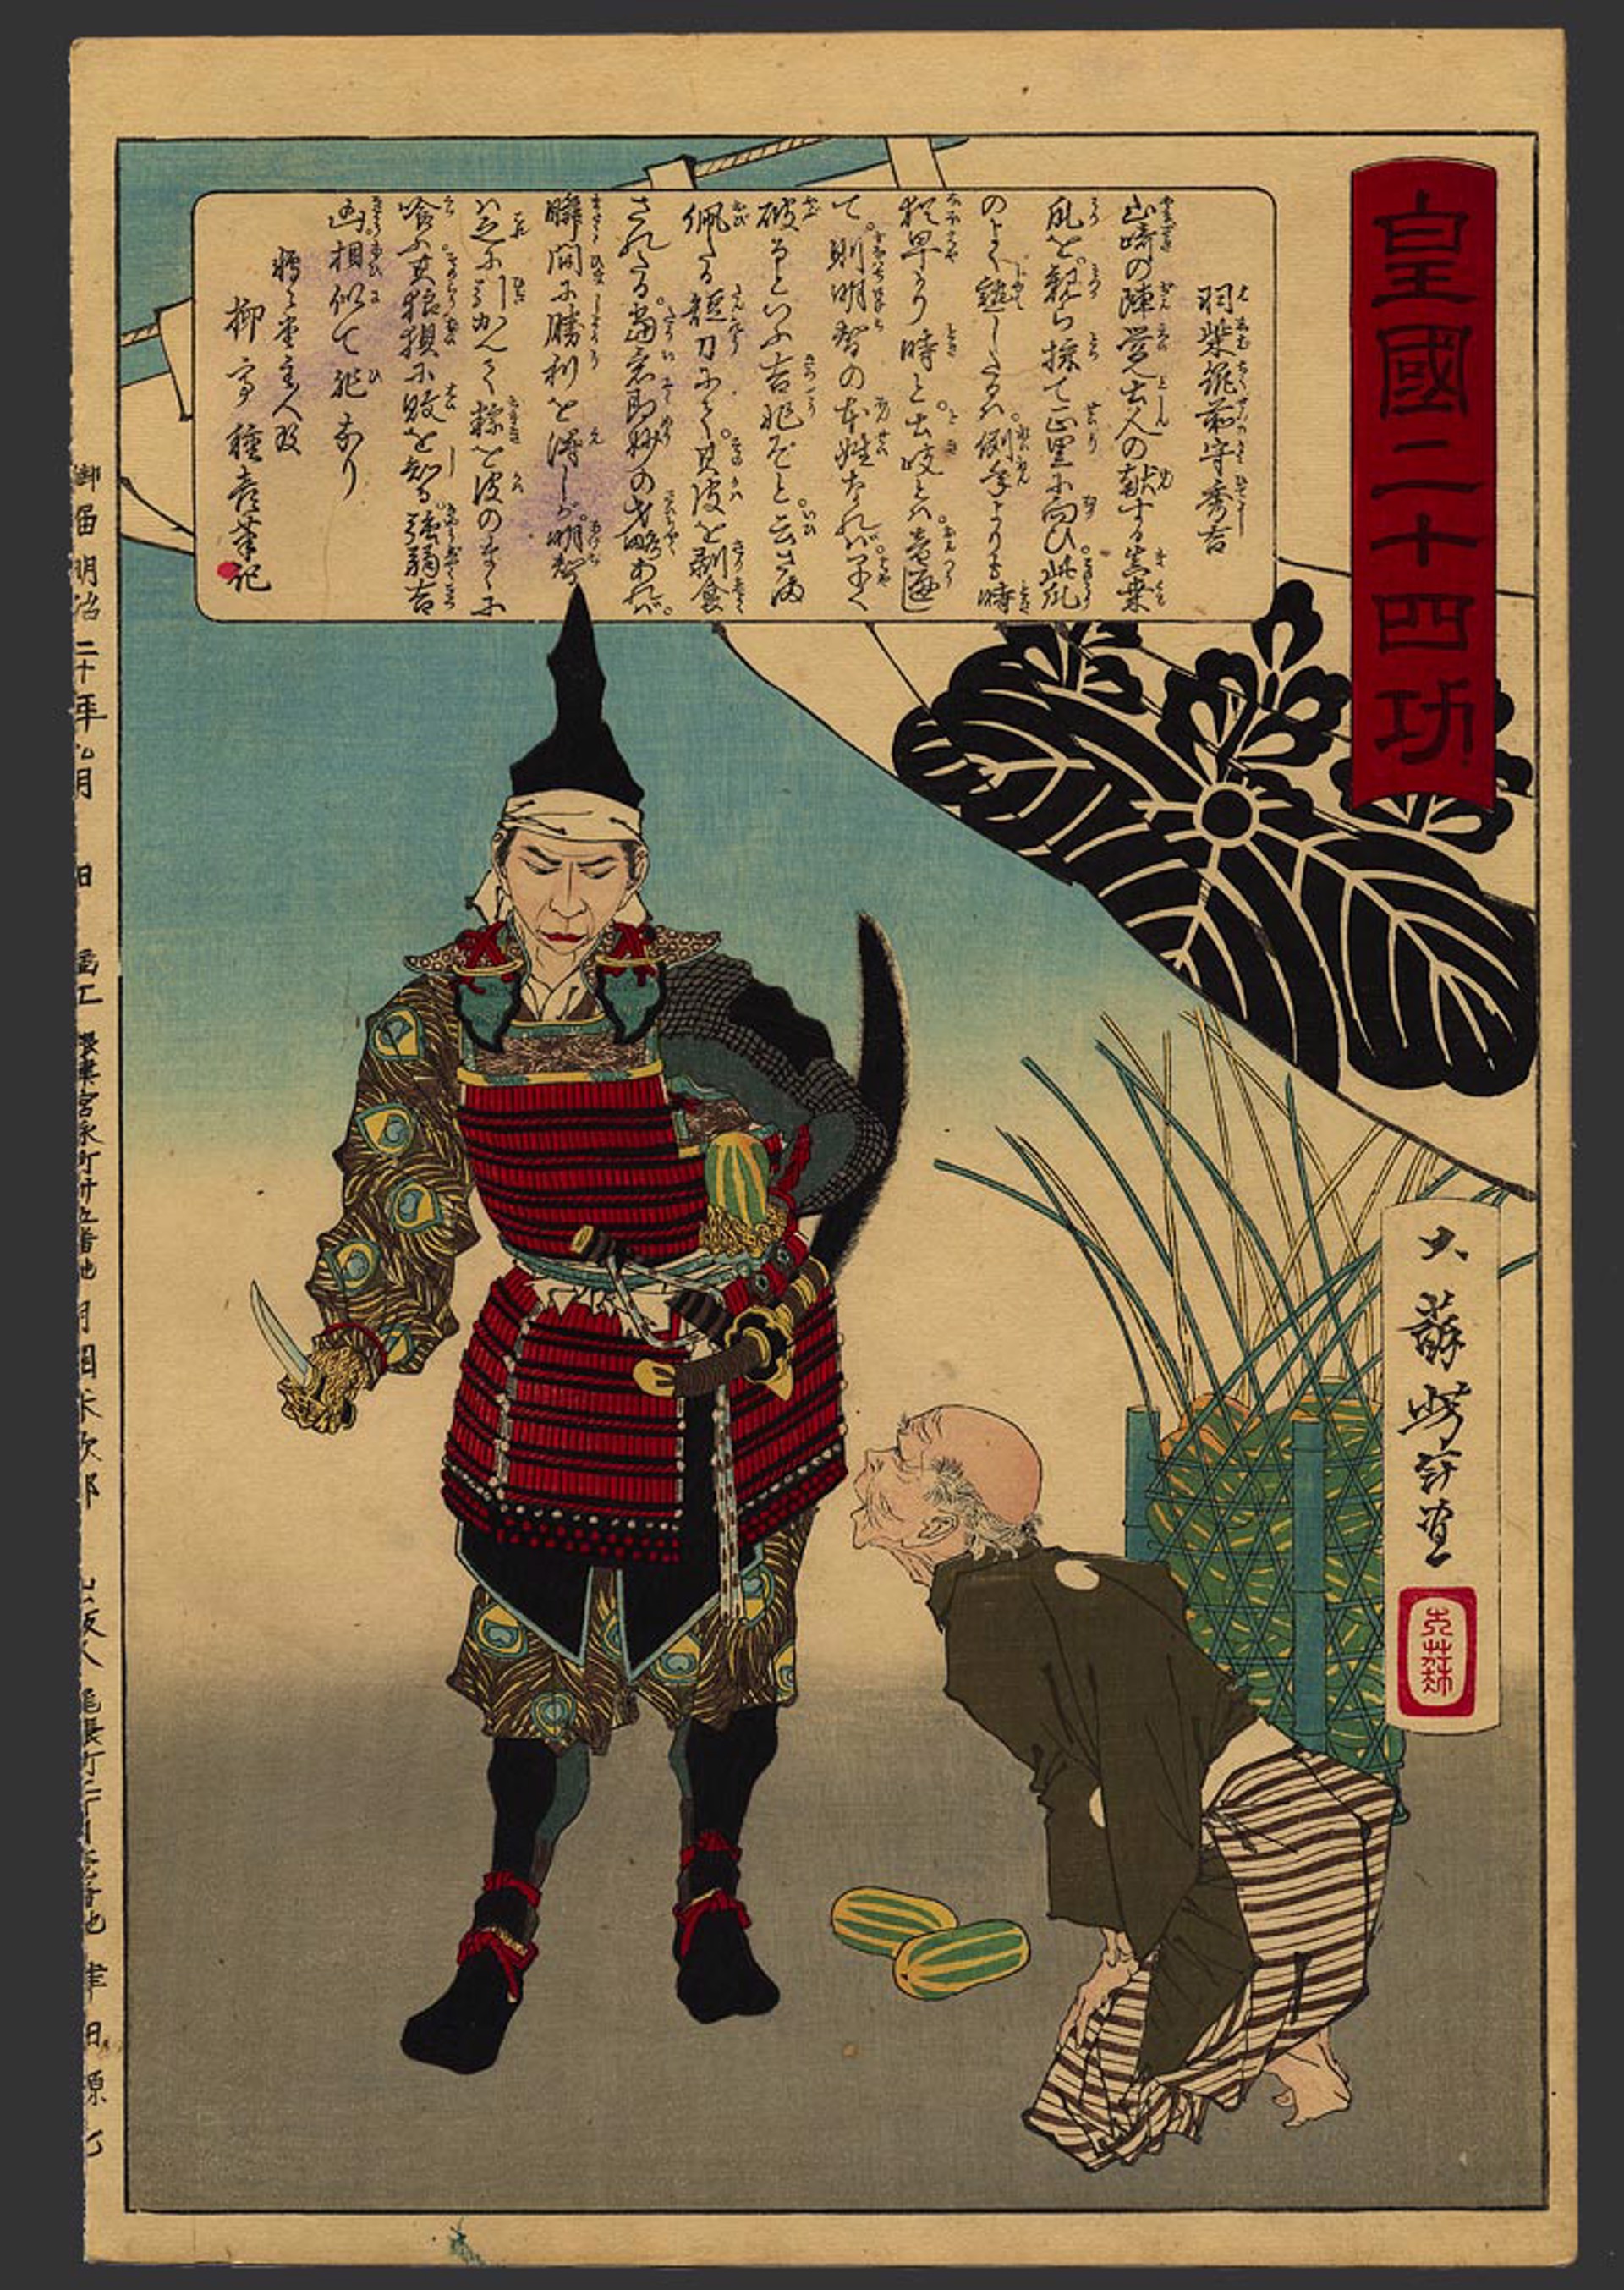 #22 Hashiba Chikuzenno Kami Hideyoshi (Toyotomi Hideyoshi 1537-98) cutting the skin of a melon. 24 Accomplishments in Imperial Japan by Yoshitoshi